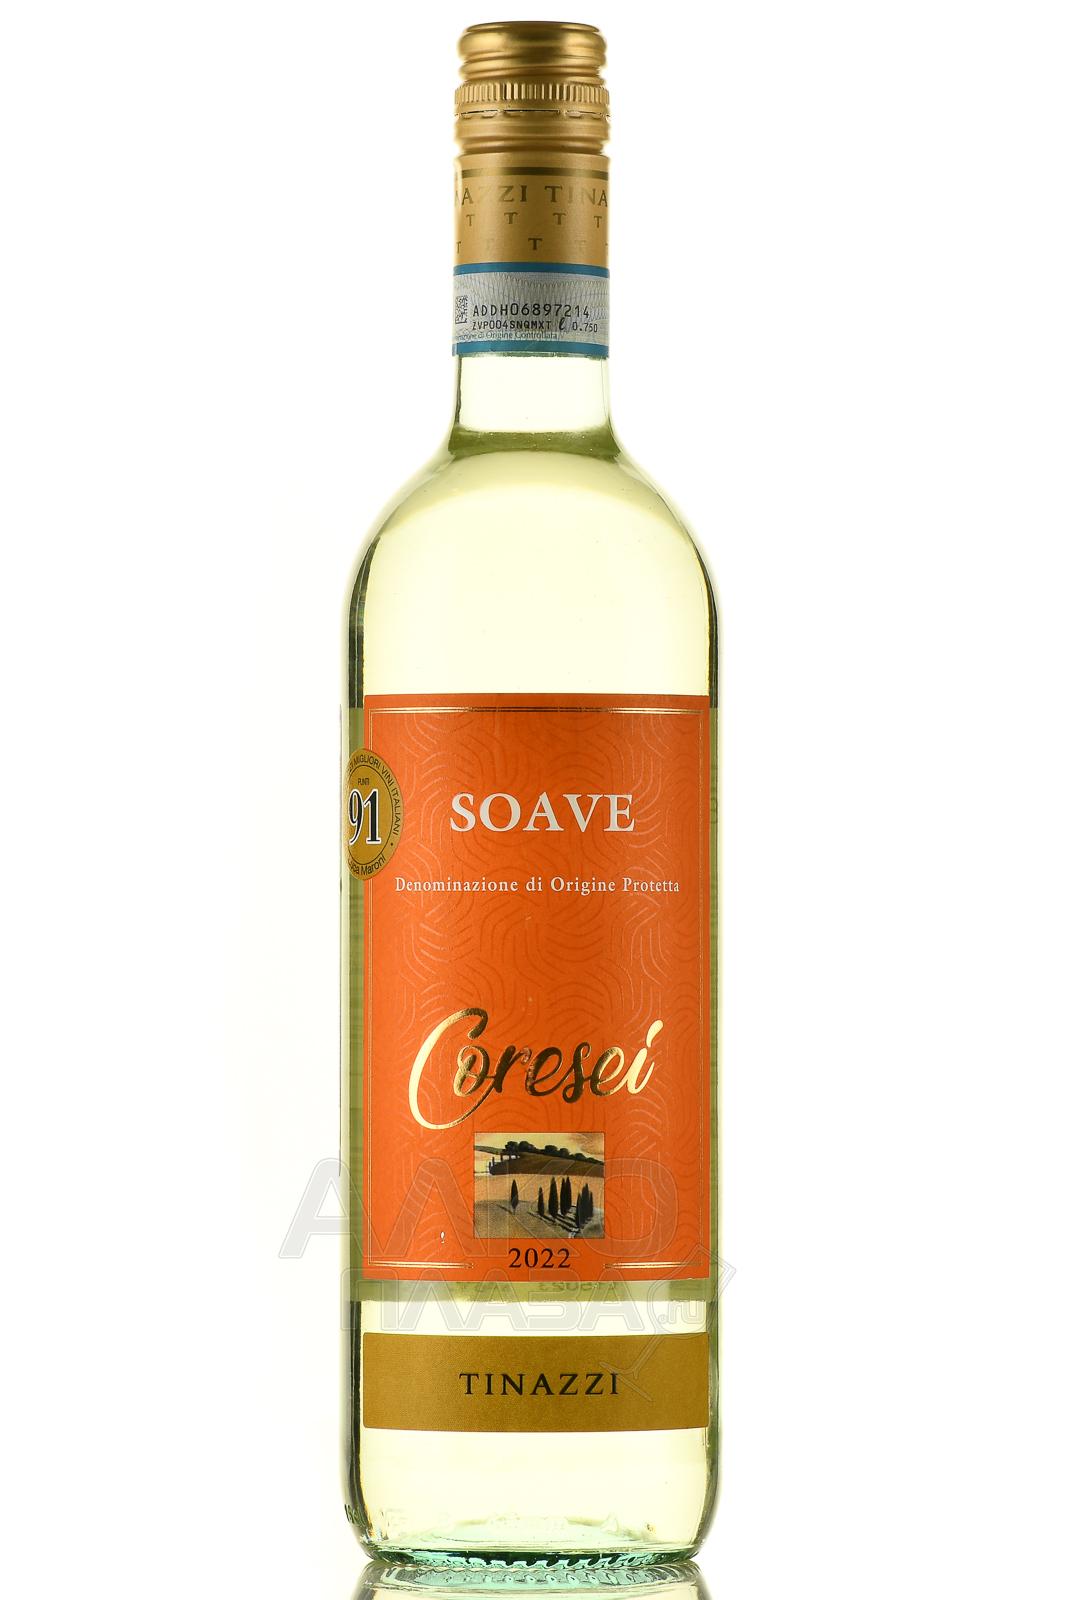 - Soave л Coresei вино Корезей - 0.75 Соаве цена белое сухое купить